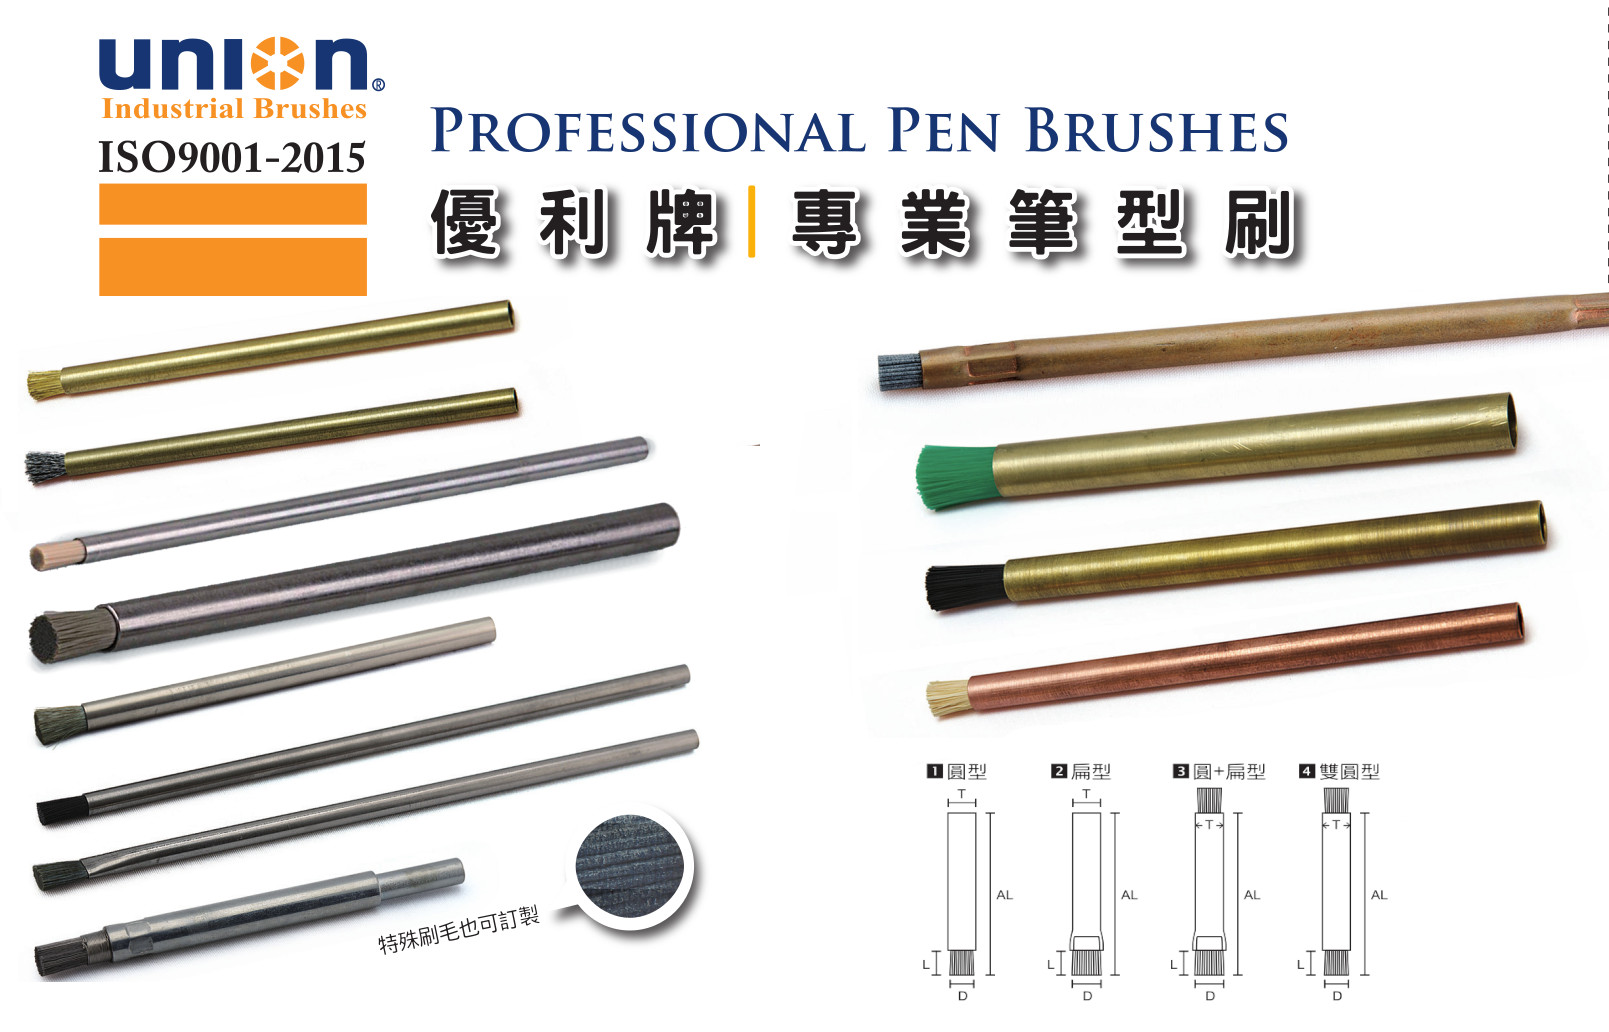 Professional Pen Brushes